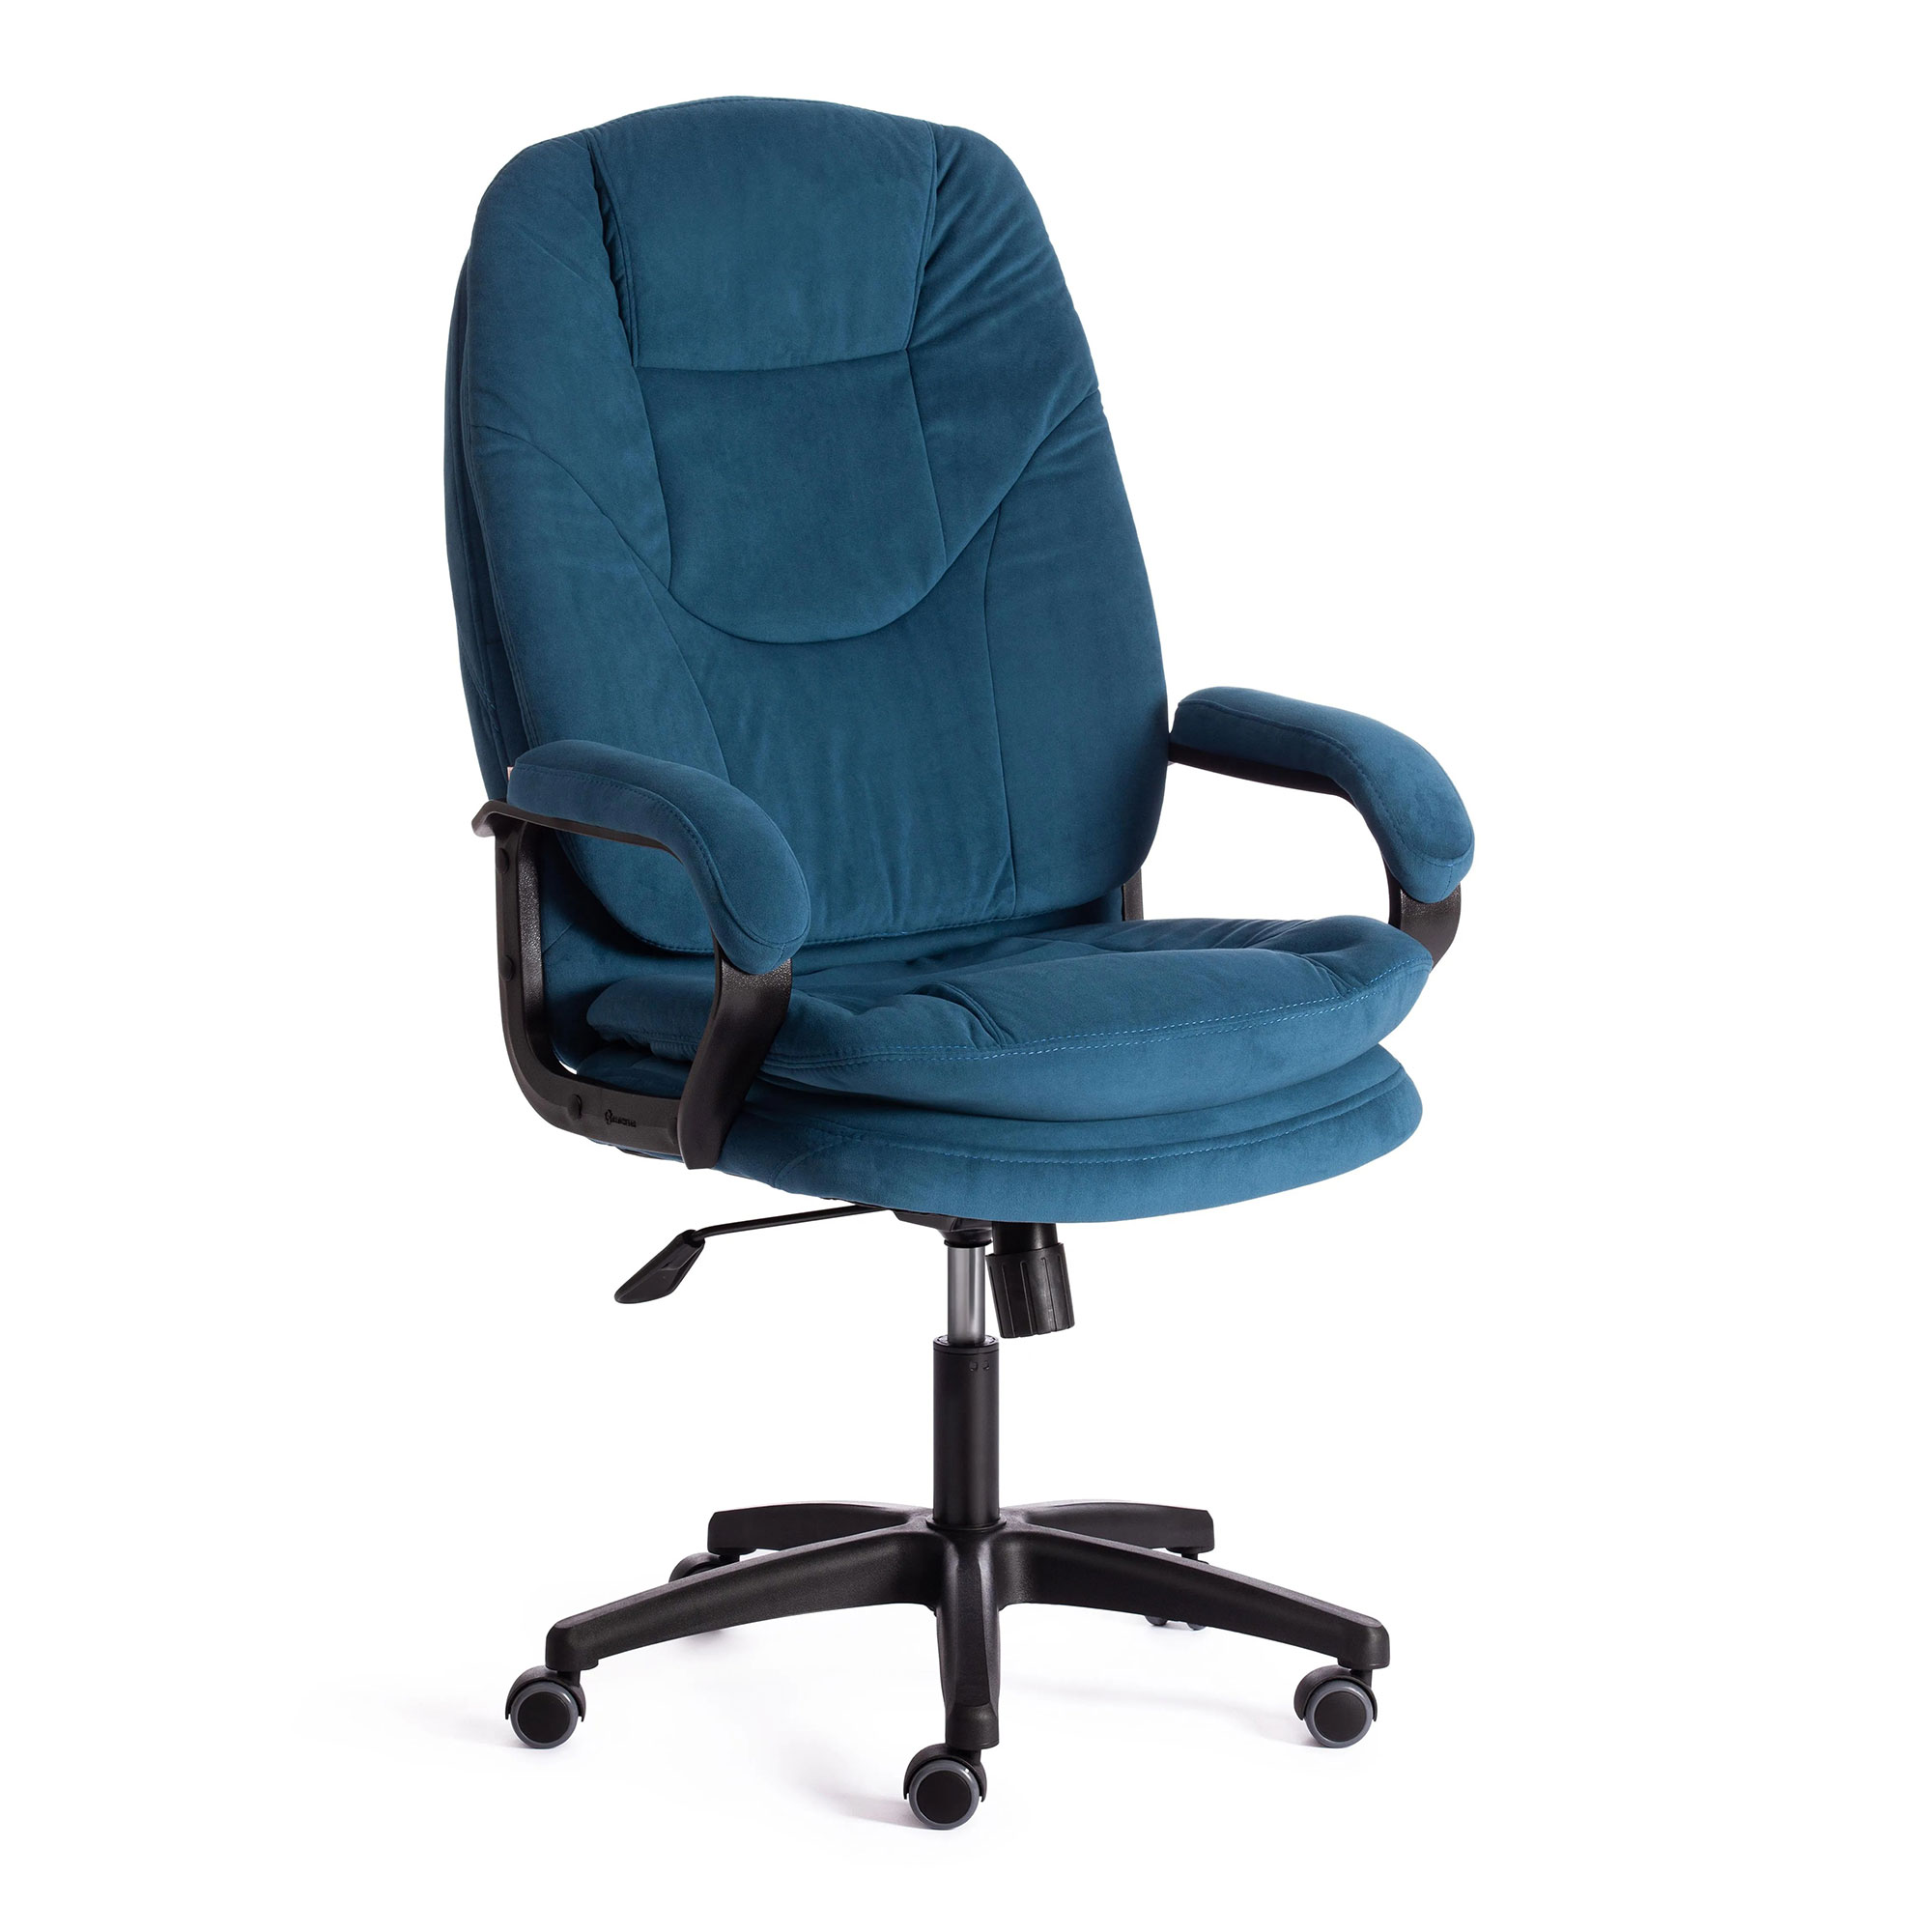 Компьютерное кресло TC Comfort синее 66х46х133 см (19387) кресло dreambag comfort синее экокожа 150x90 см